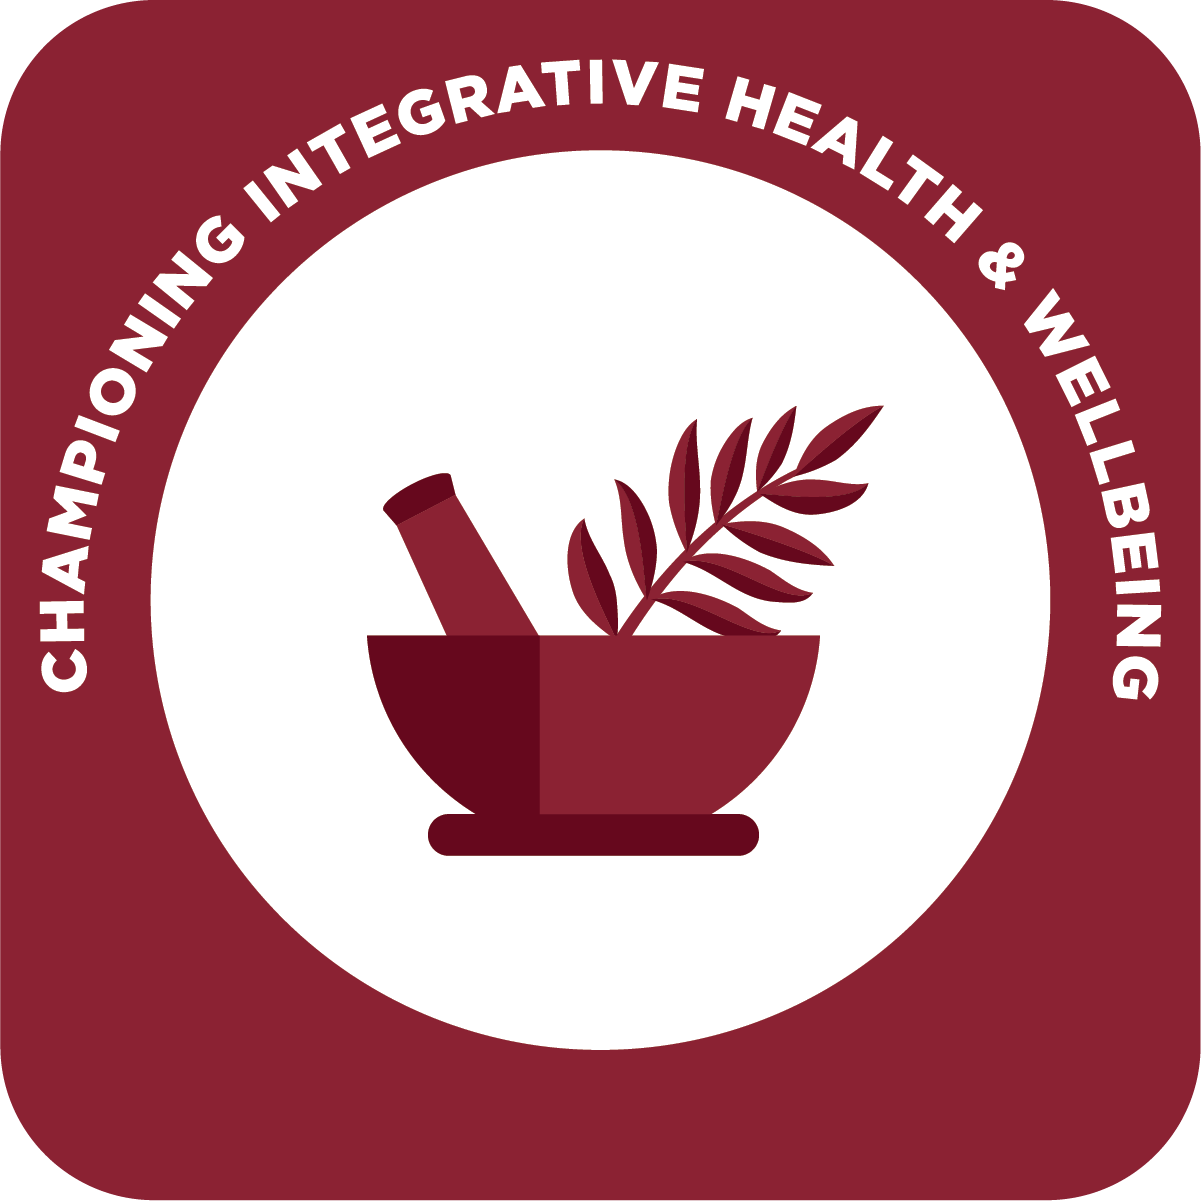 Championing Integrative Health & Wellbeing